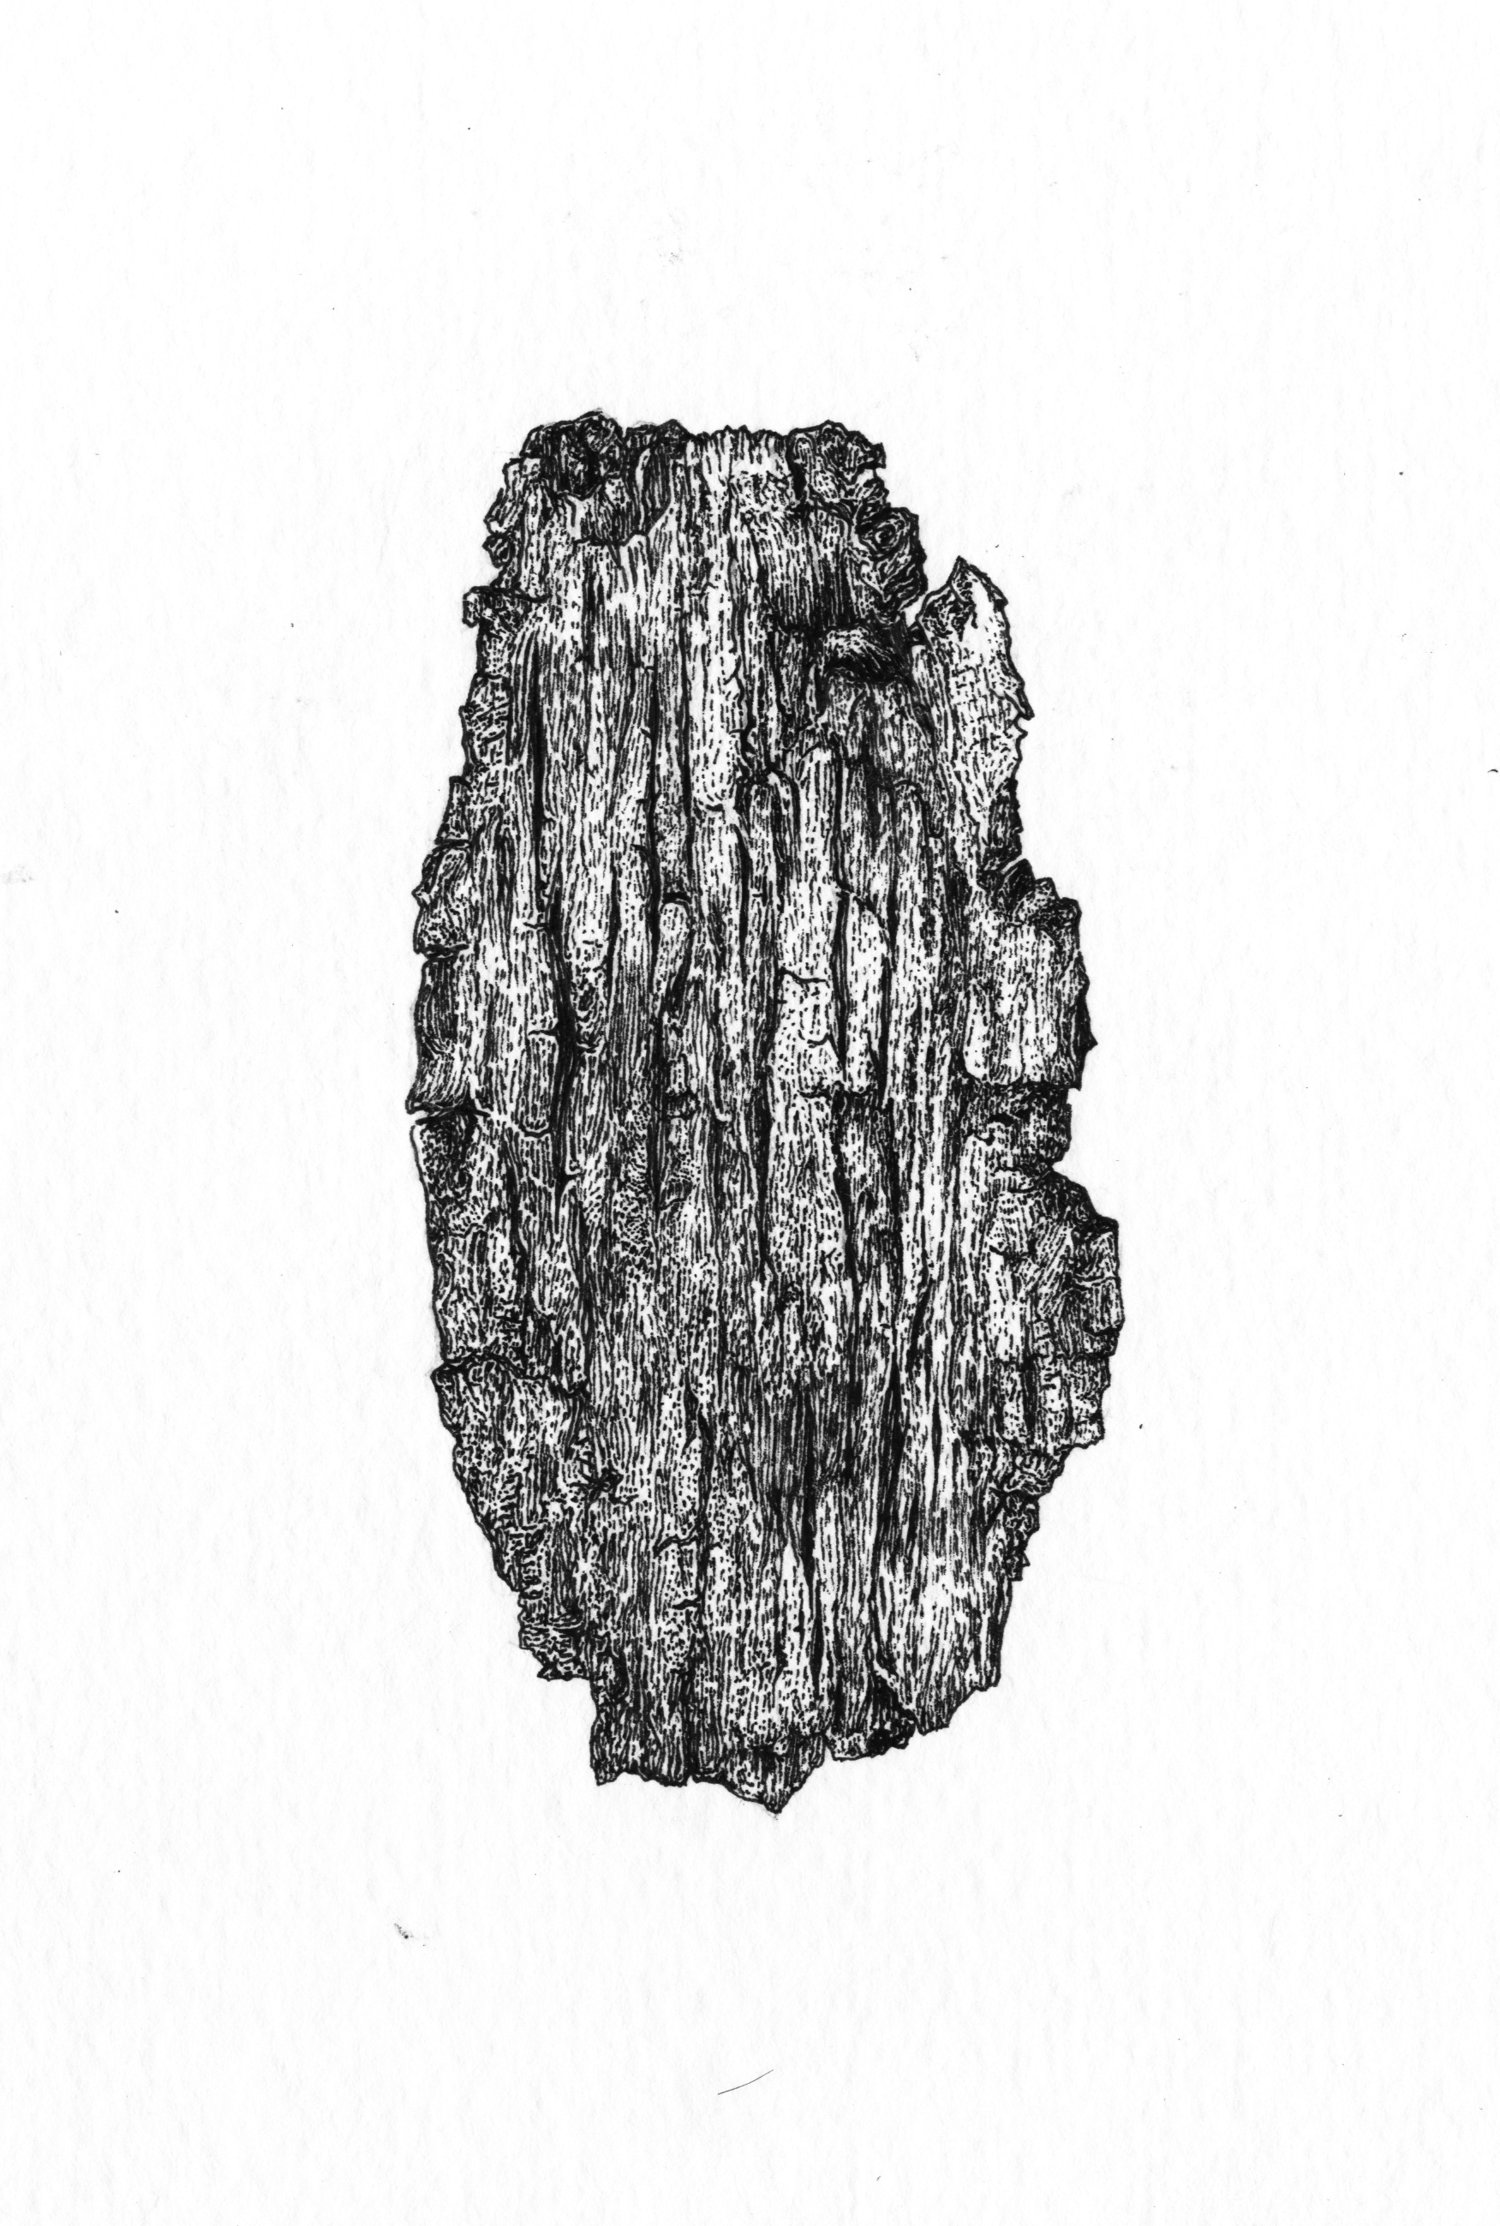 drawing of inside of bark